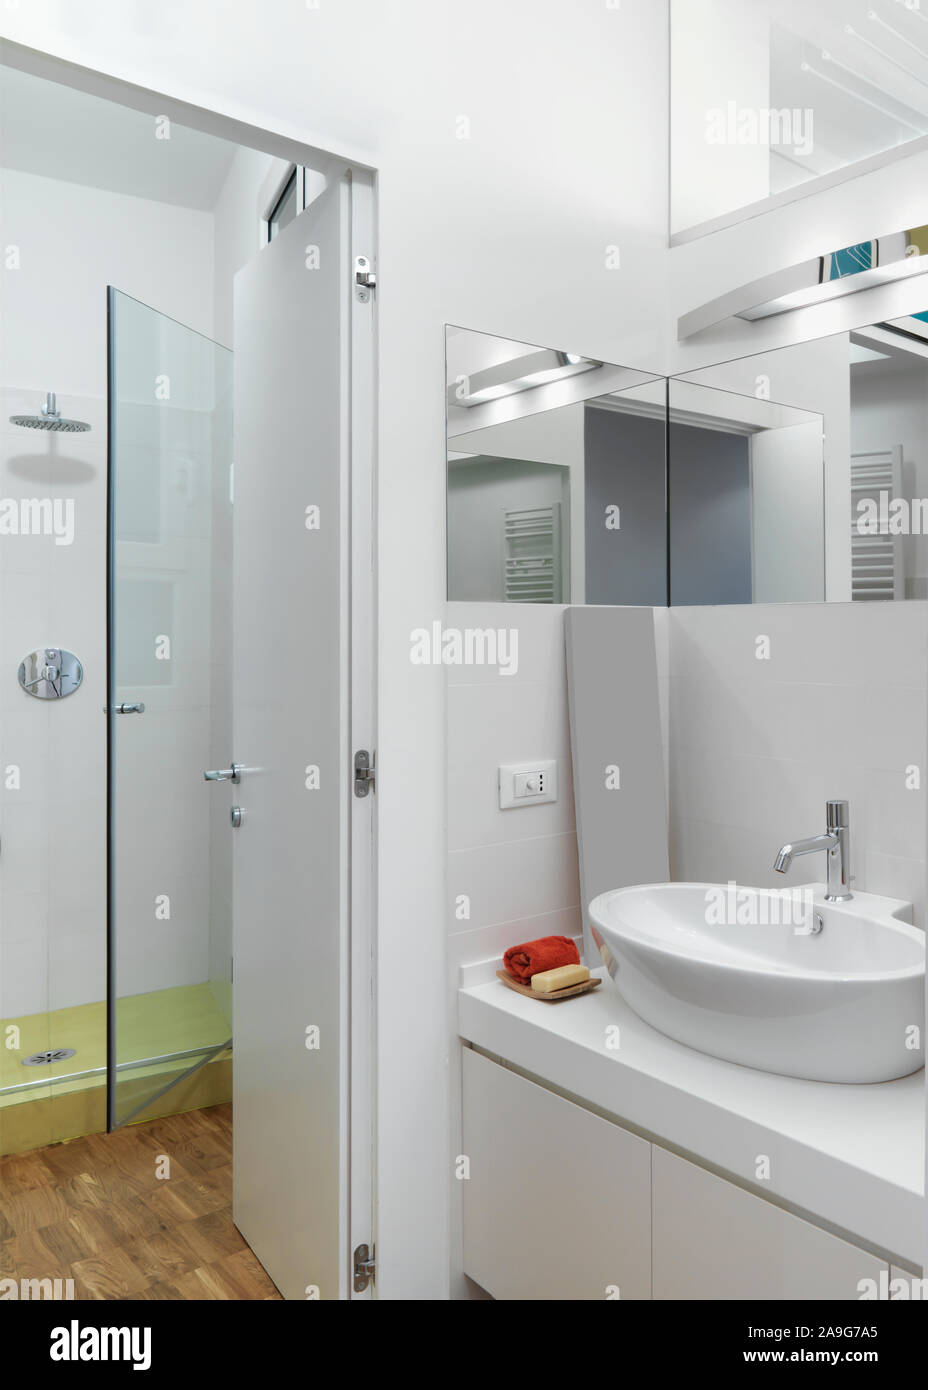 Cabina de ducha de mampostería fotografías e imágenes de alta resolución -  Alamy